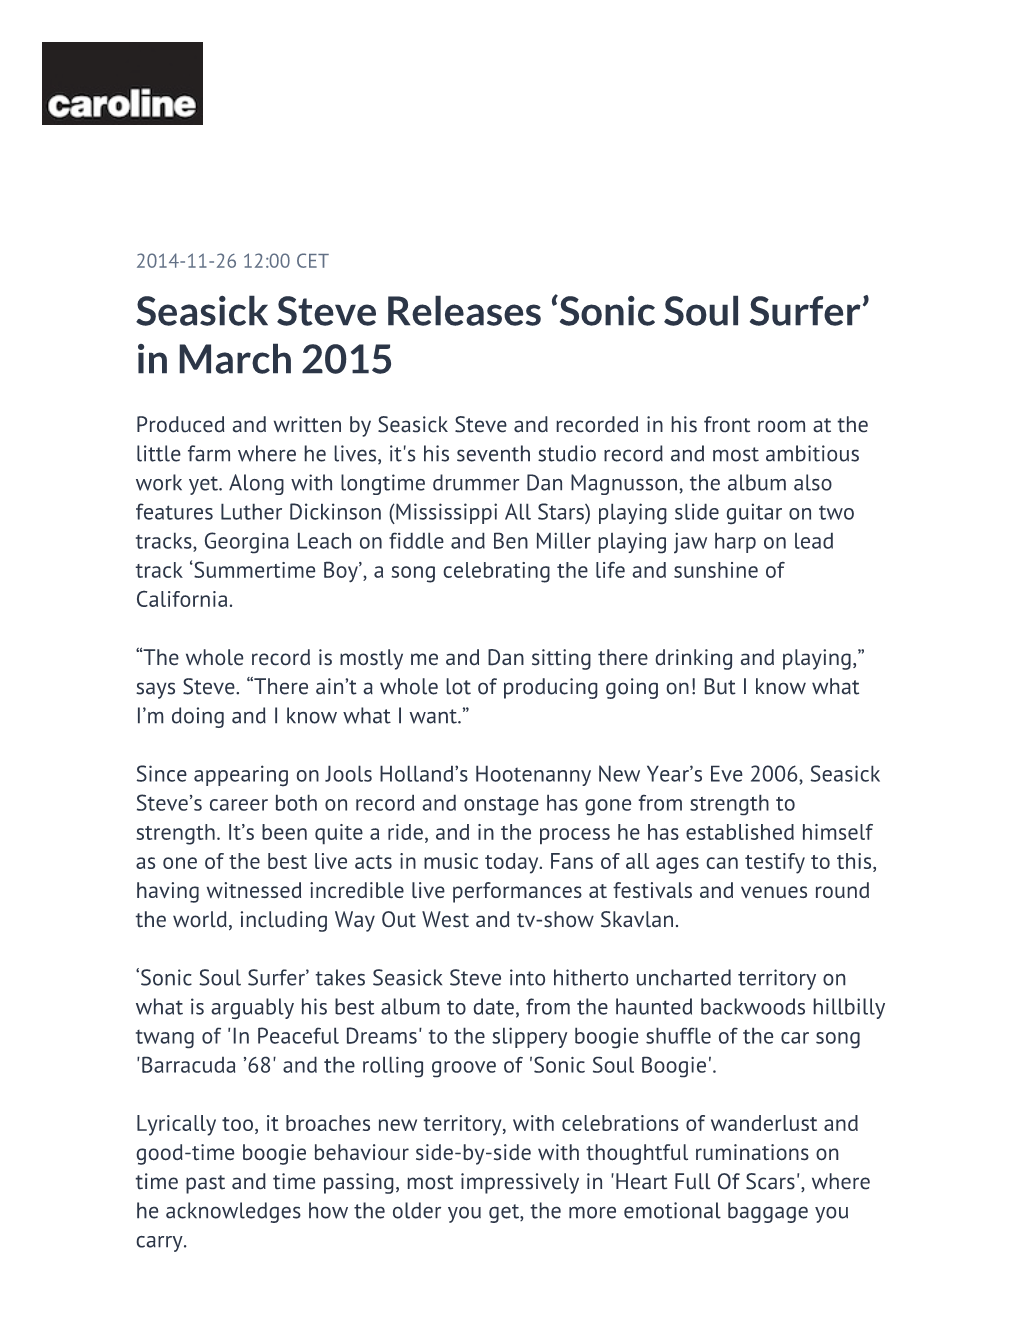 Sonic Soul Surfer’ in March 2015